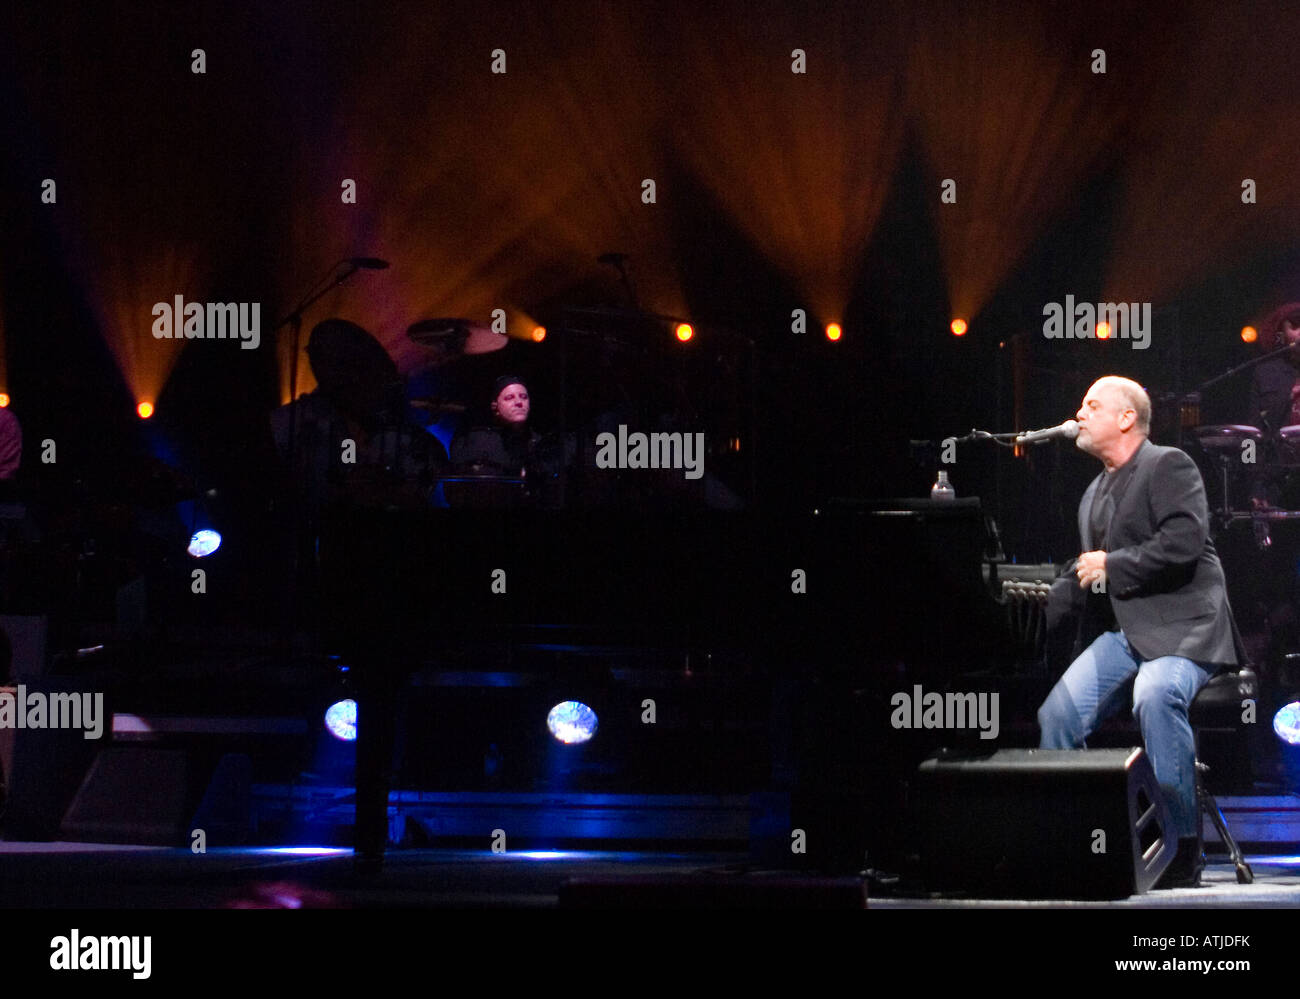 Billy Joel performed in concert at the University of Virginia's John Paul Jones Arena in Charlottesville, VA on Feb. 23, 2007. Stock Photo